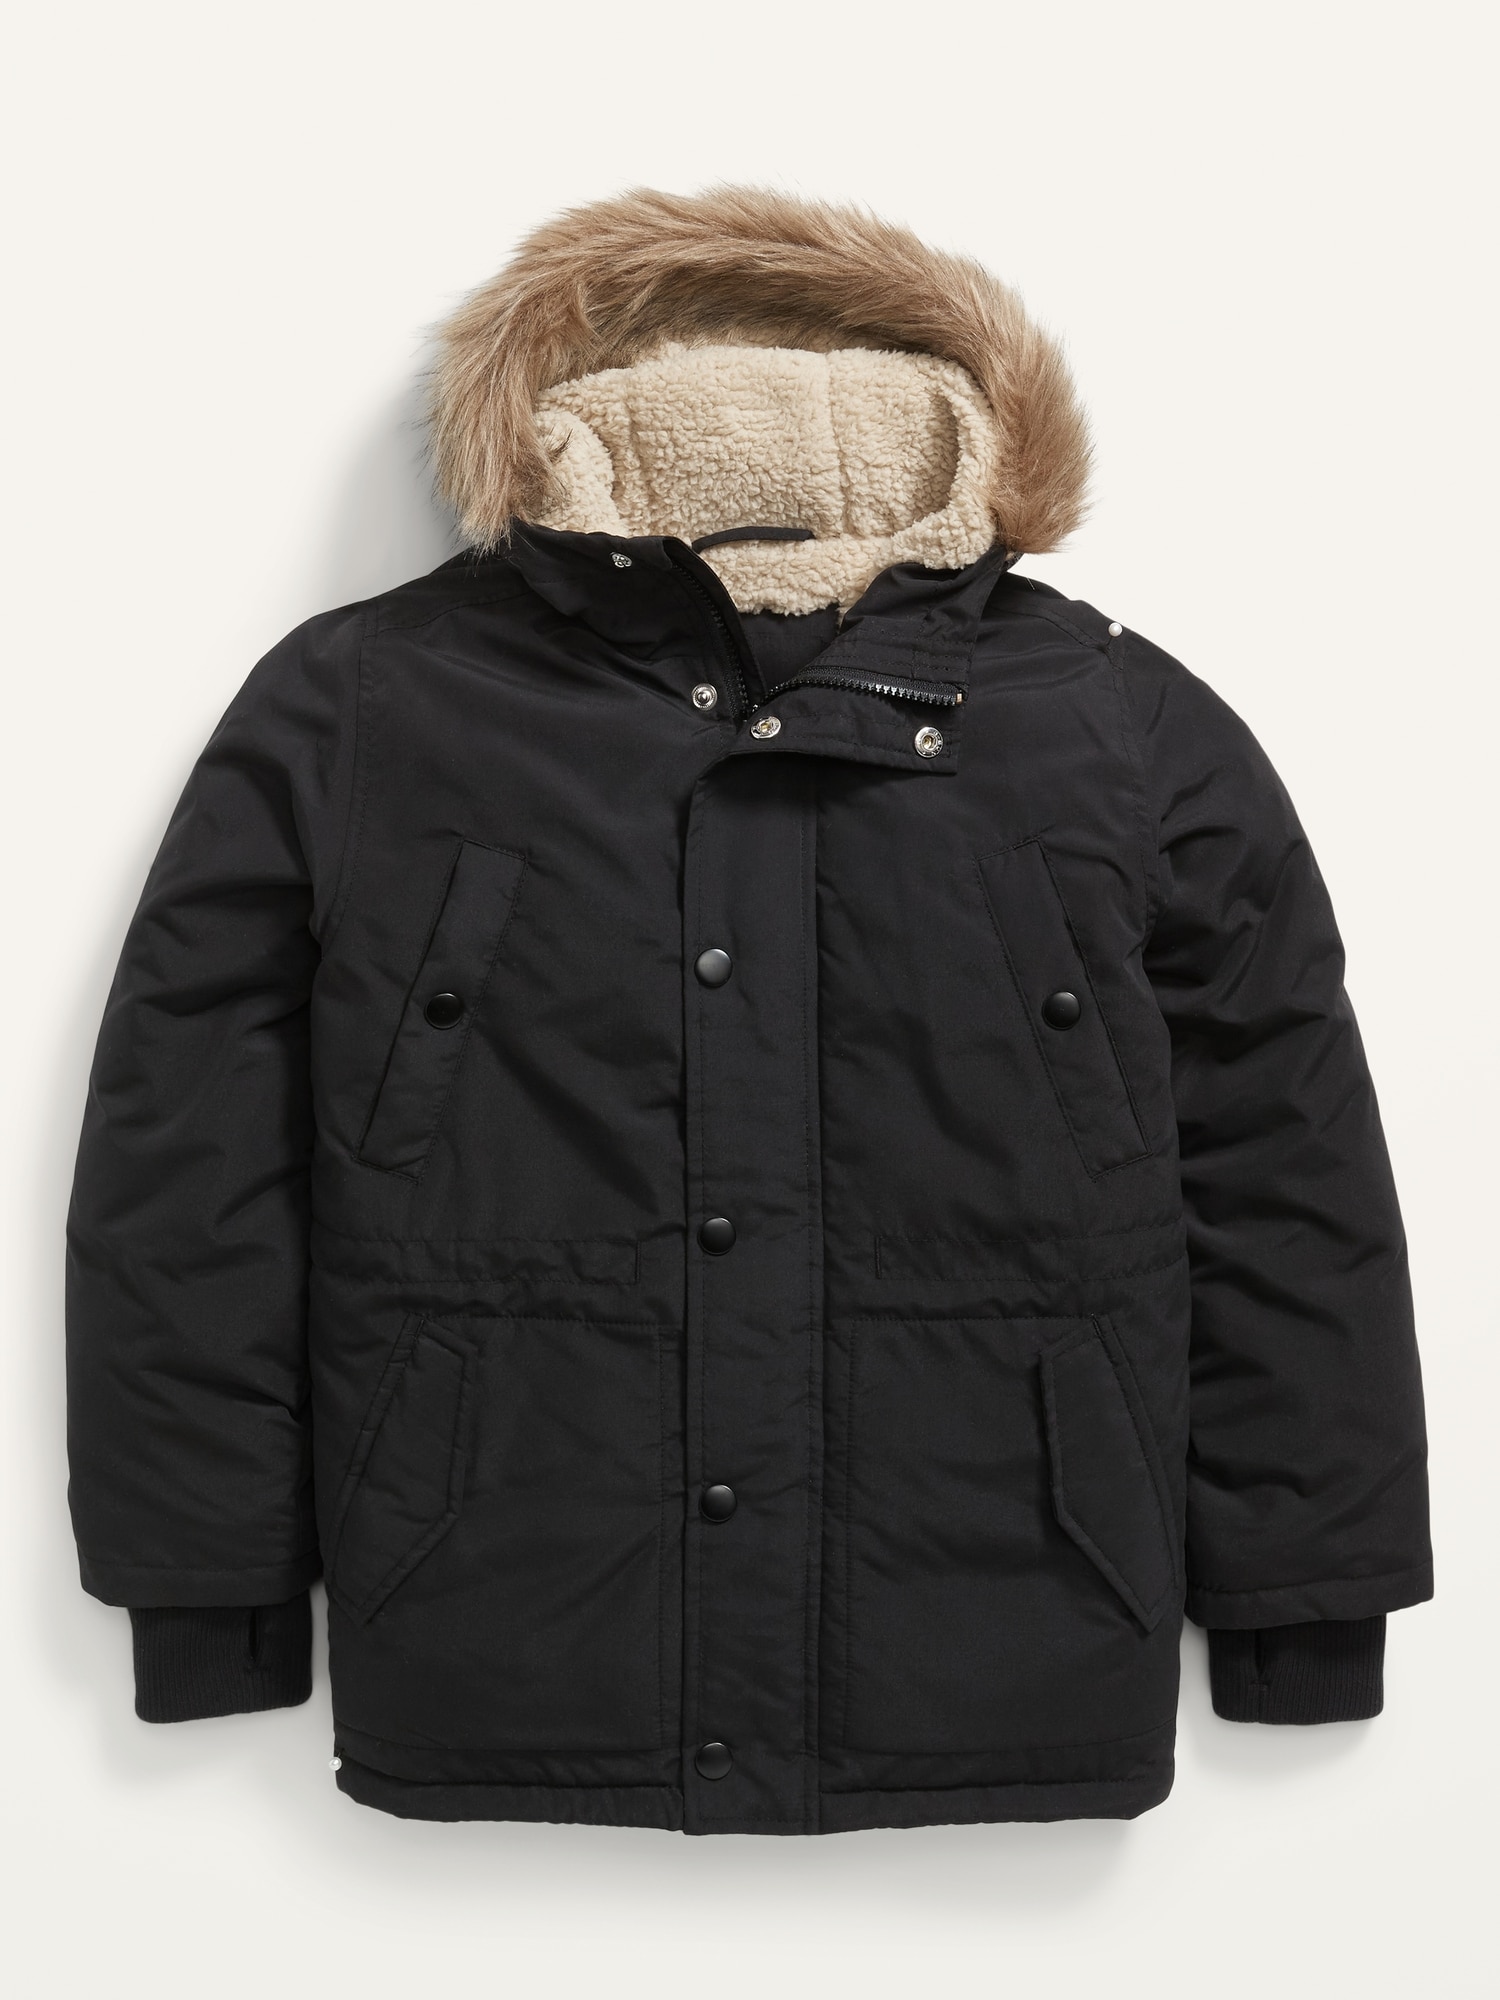 Go-Warm Faux-Fur-Trim Hooded Parka Coat For Boys | Old Navy